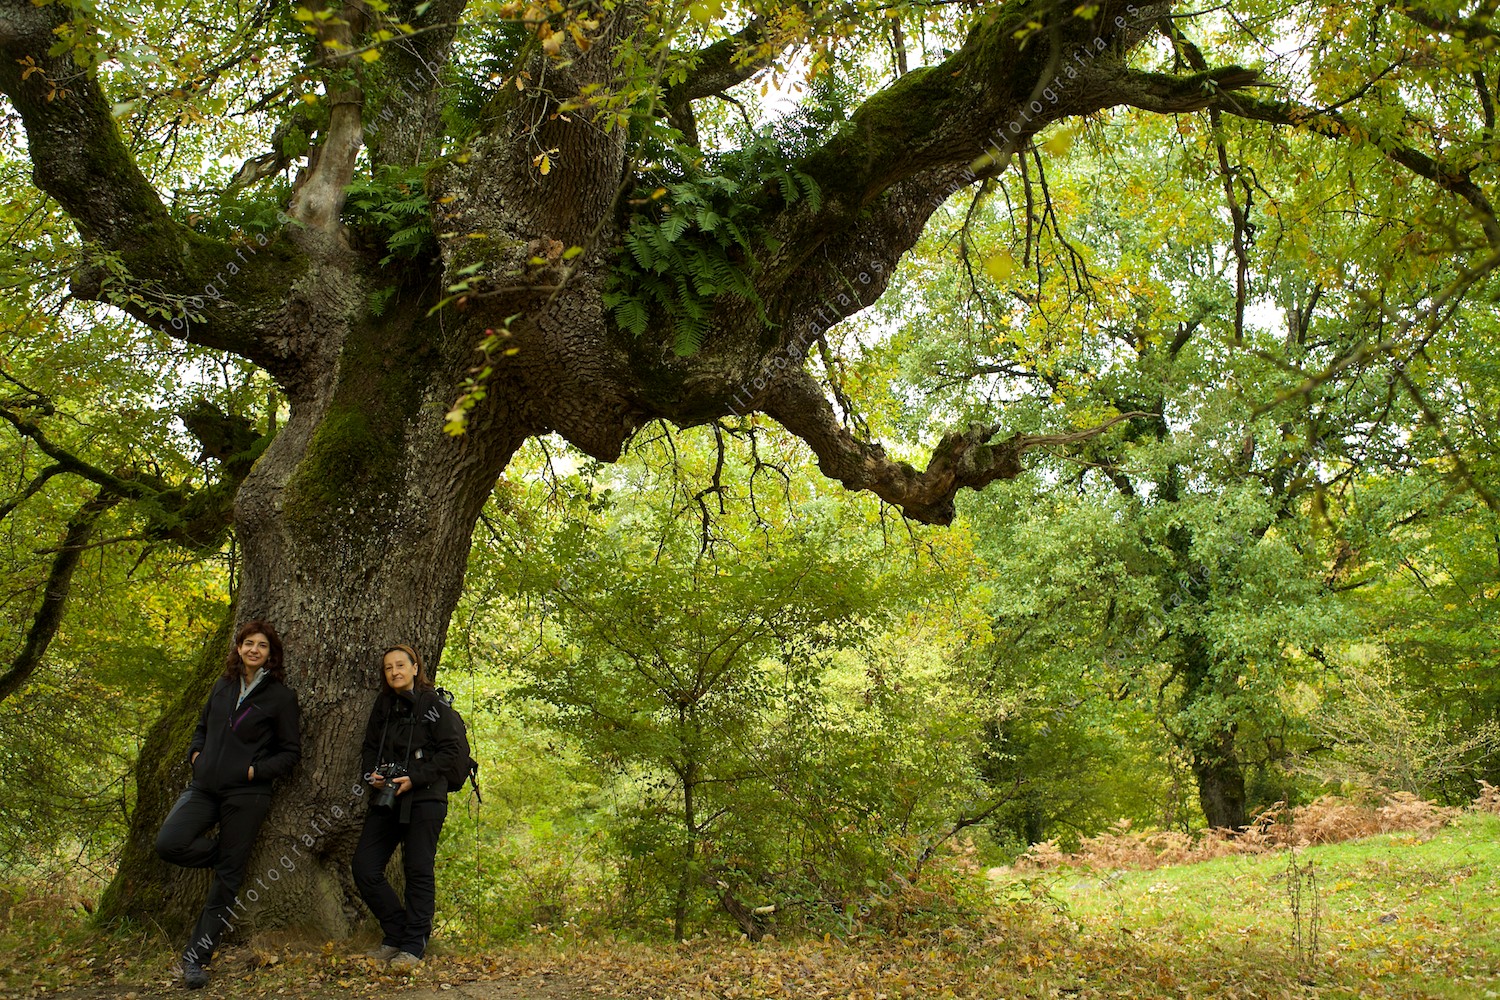 mis dos compañeras fotógrafas de Denbora posando bajo un árbol centenario en Andoin